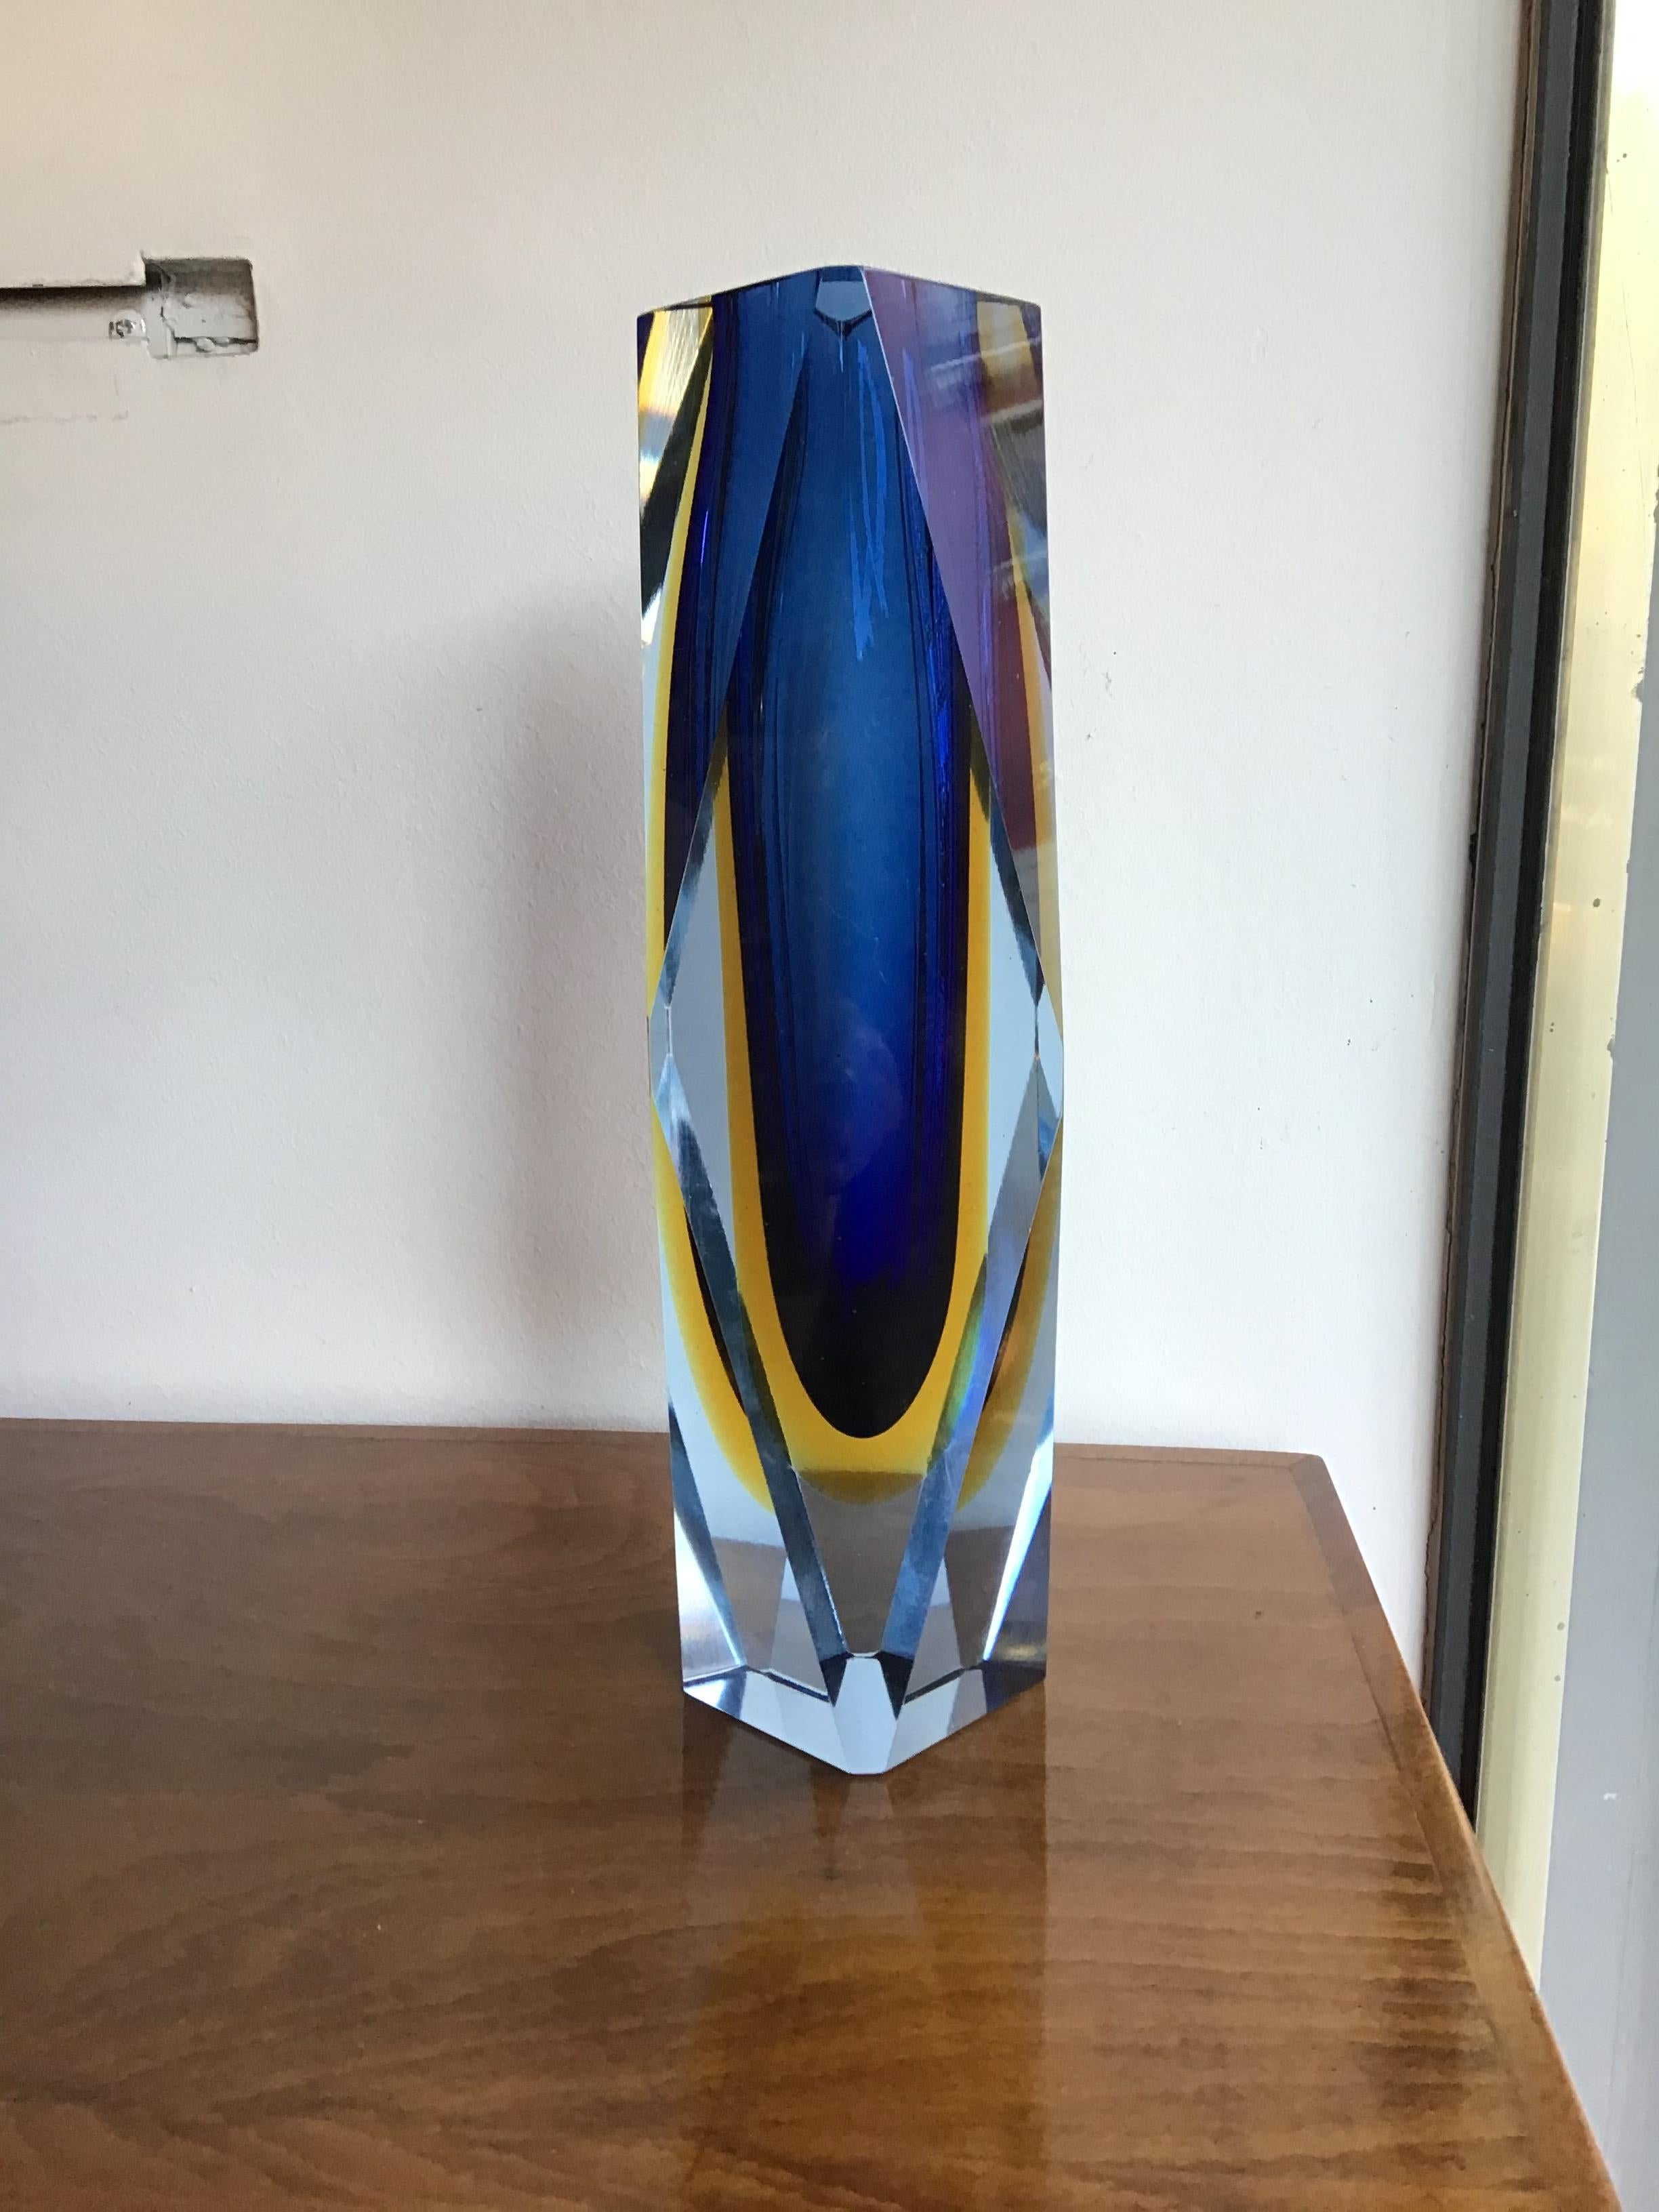 Italian Seguso “Flavio Poli” Vase Murano Glass, 1950, Italy